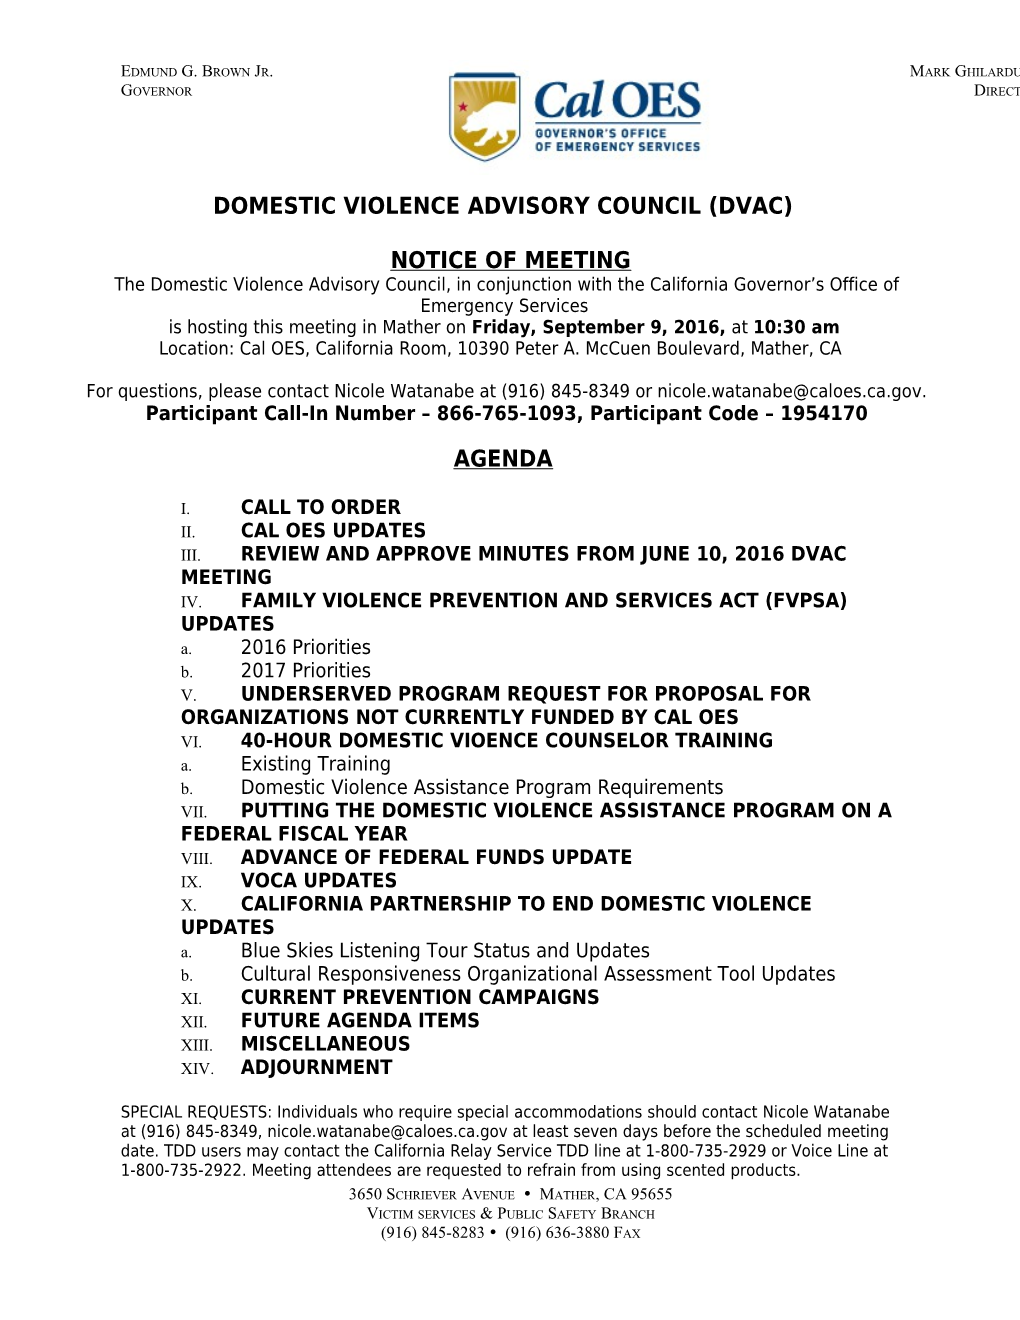 Domestic Violence Advisory Council (DVAC) Notice of Meeting - September 9, 2016